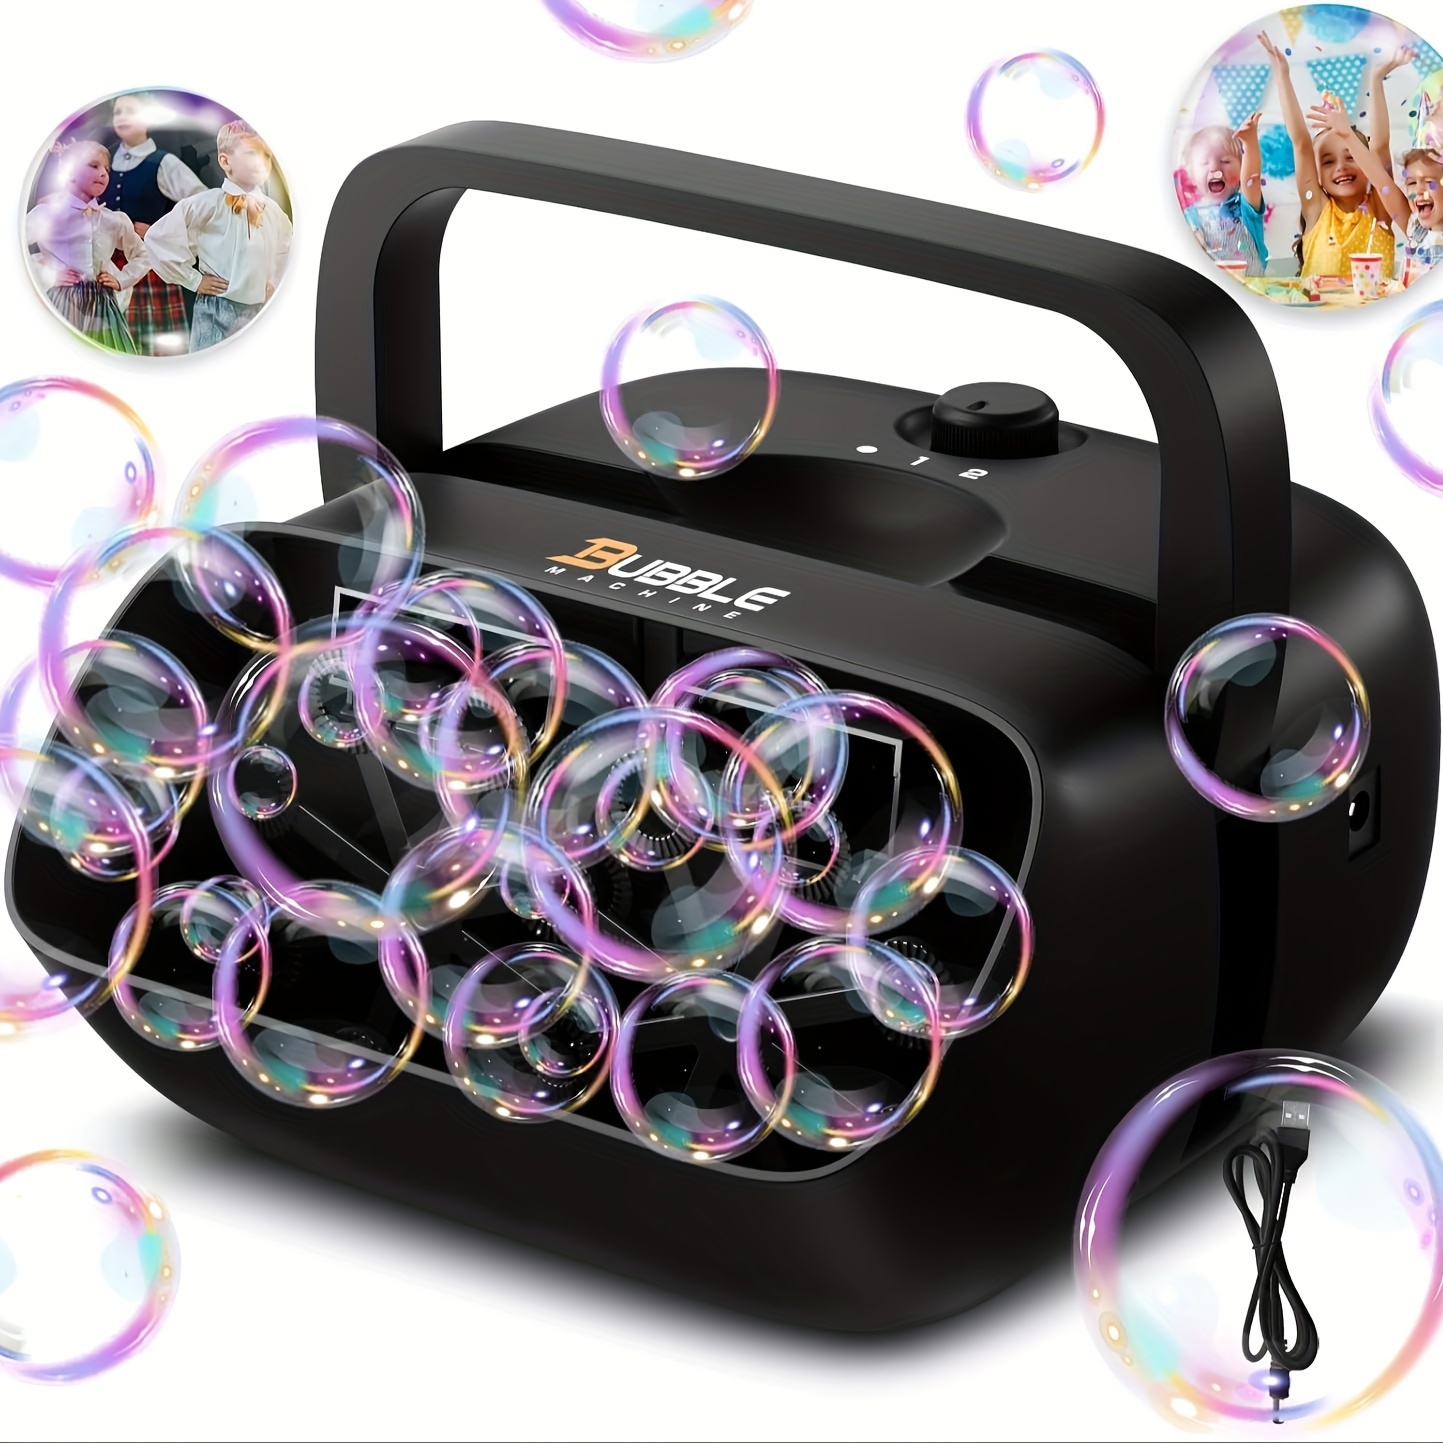  TEMI Juguetes de máquina de burbujas para niños